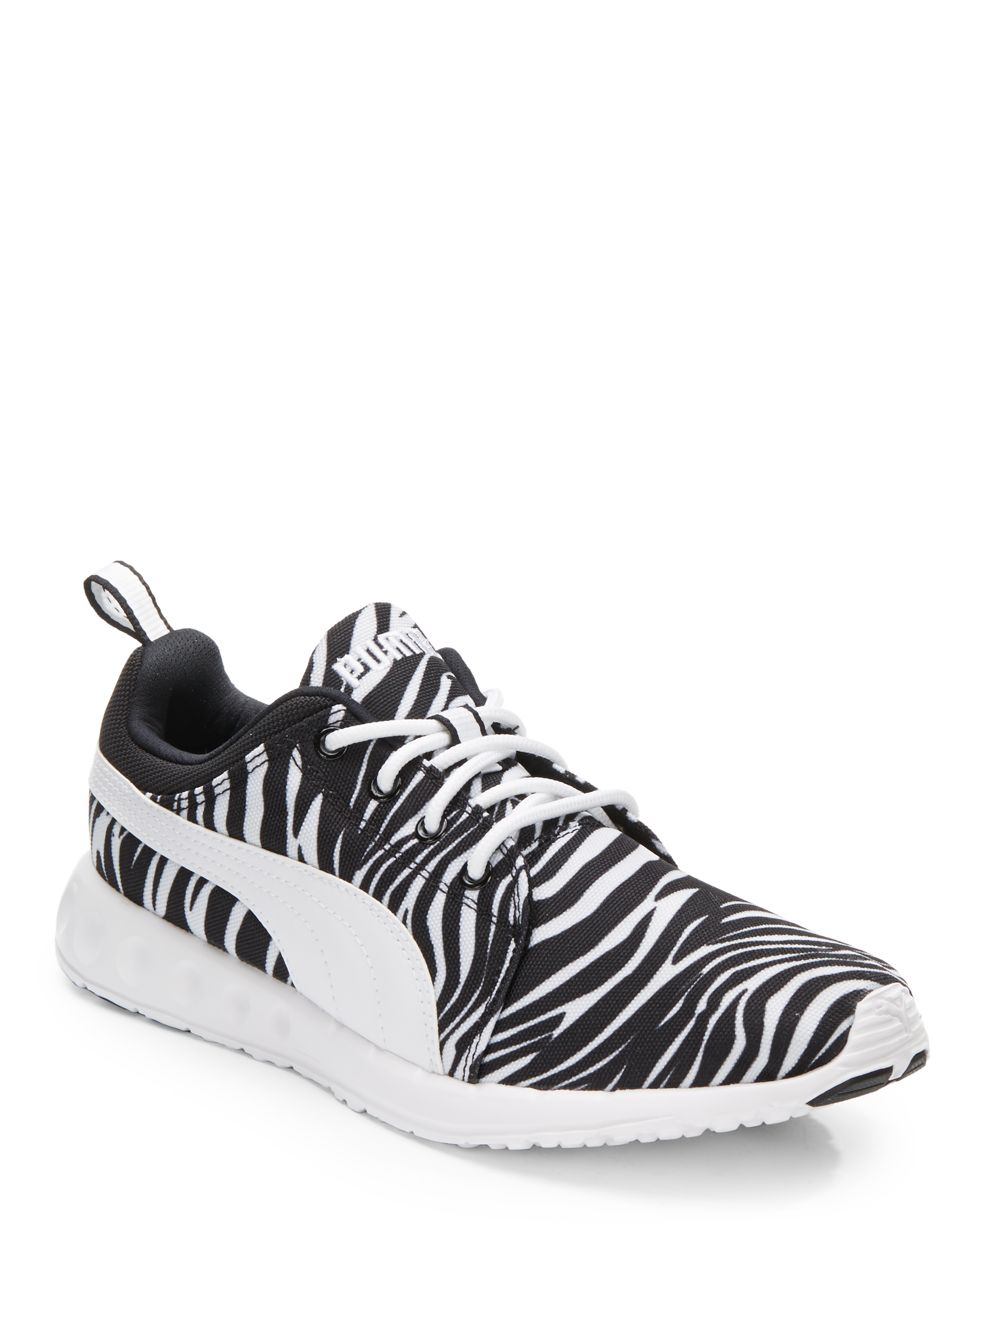 puma zebra print shoes off 51% - www 